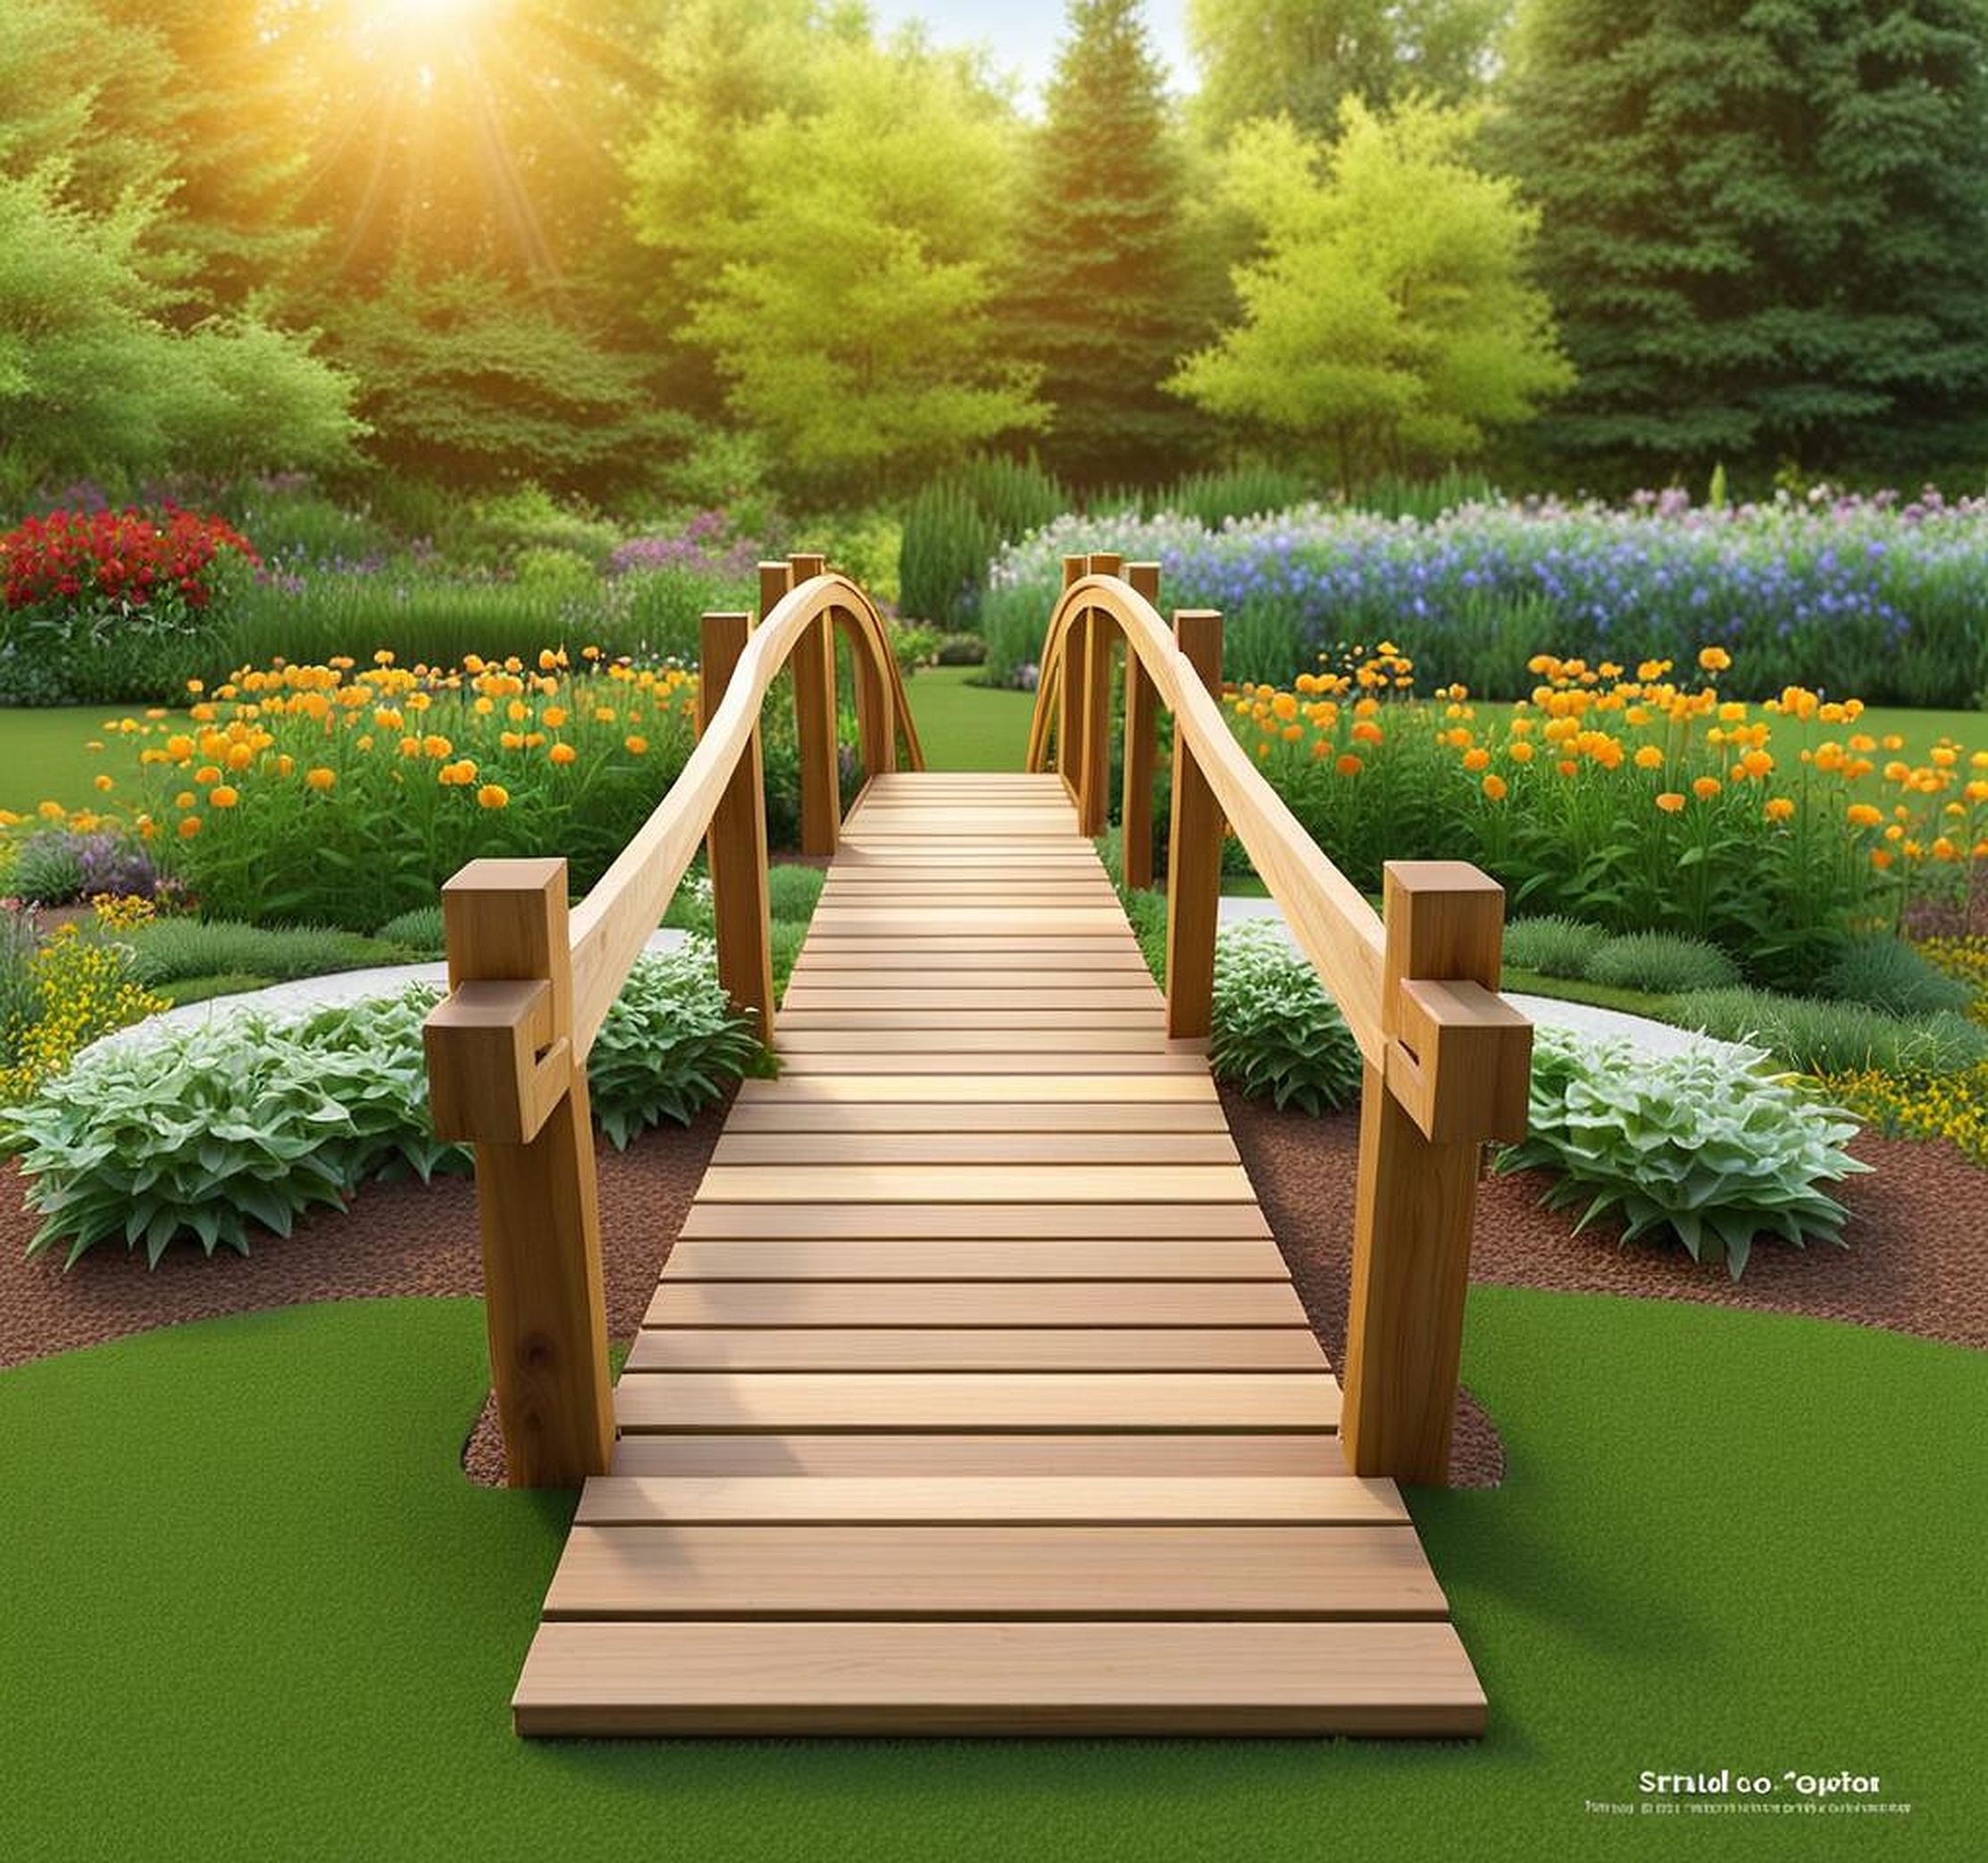 Small Wooden Bridges for Gardens Create Cozy Outdoor Spaces